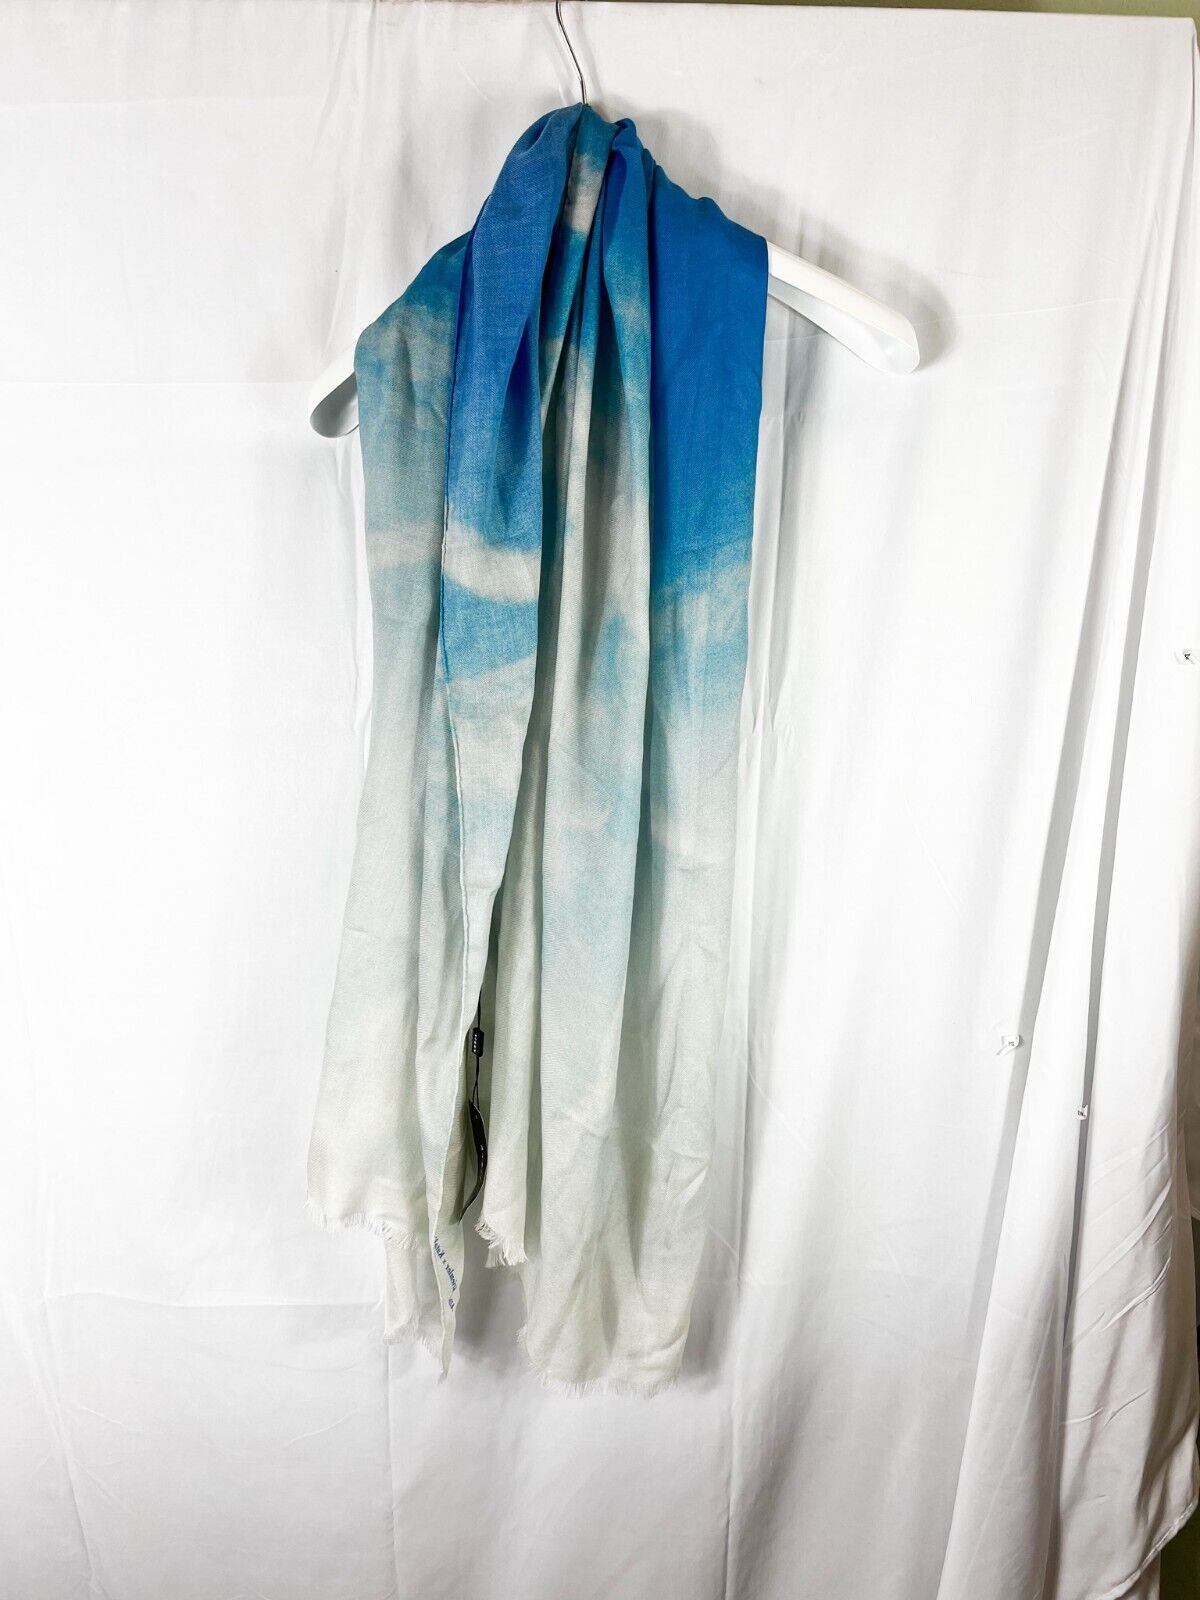 AKRIS elegant large sky Blue cashmere silk shawl scarf $995